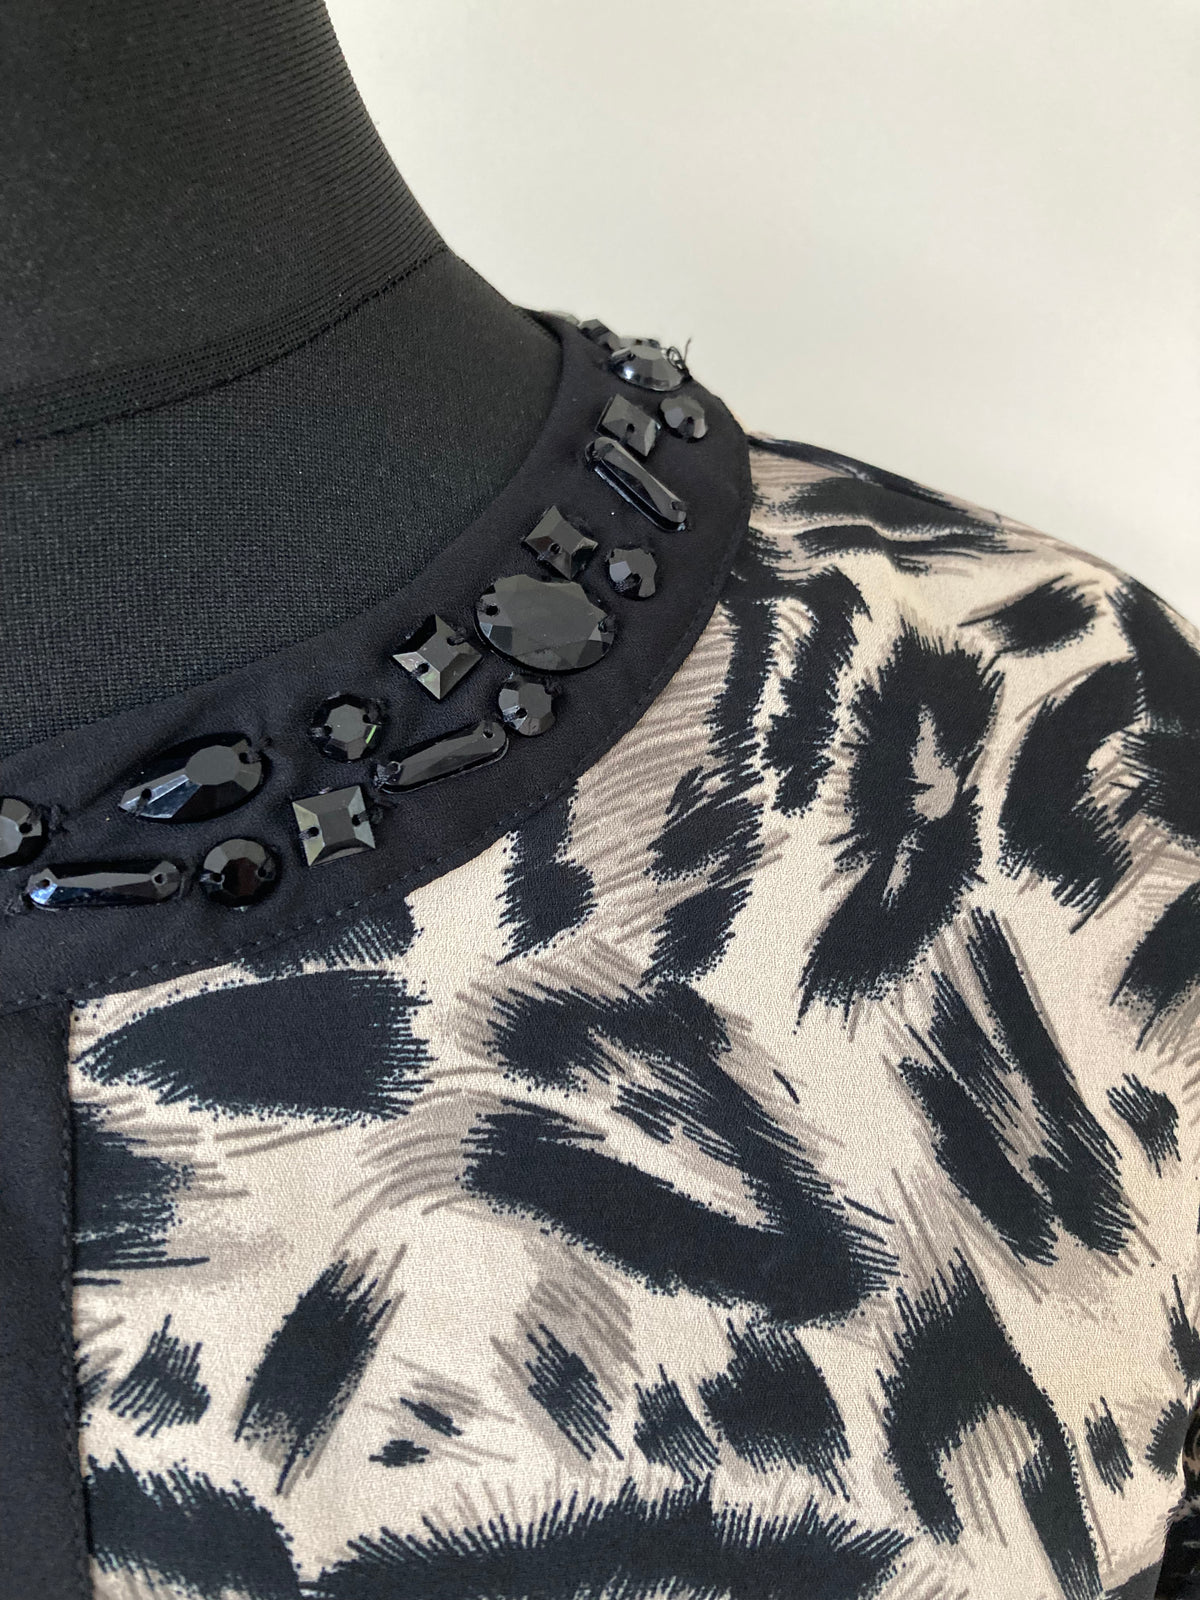 Leopard print tunic by BONPRIX size 10